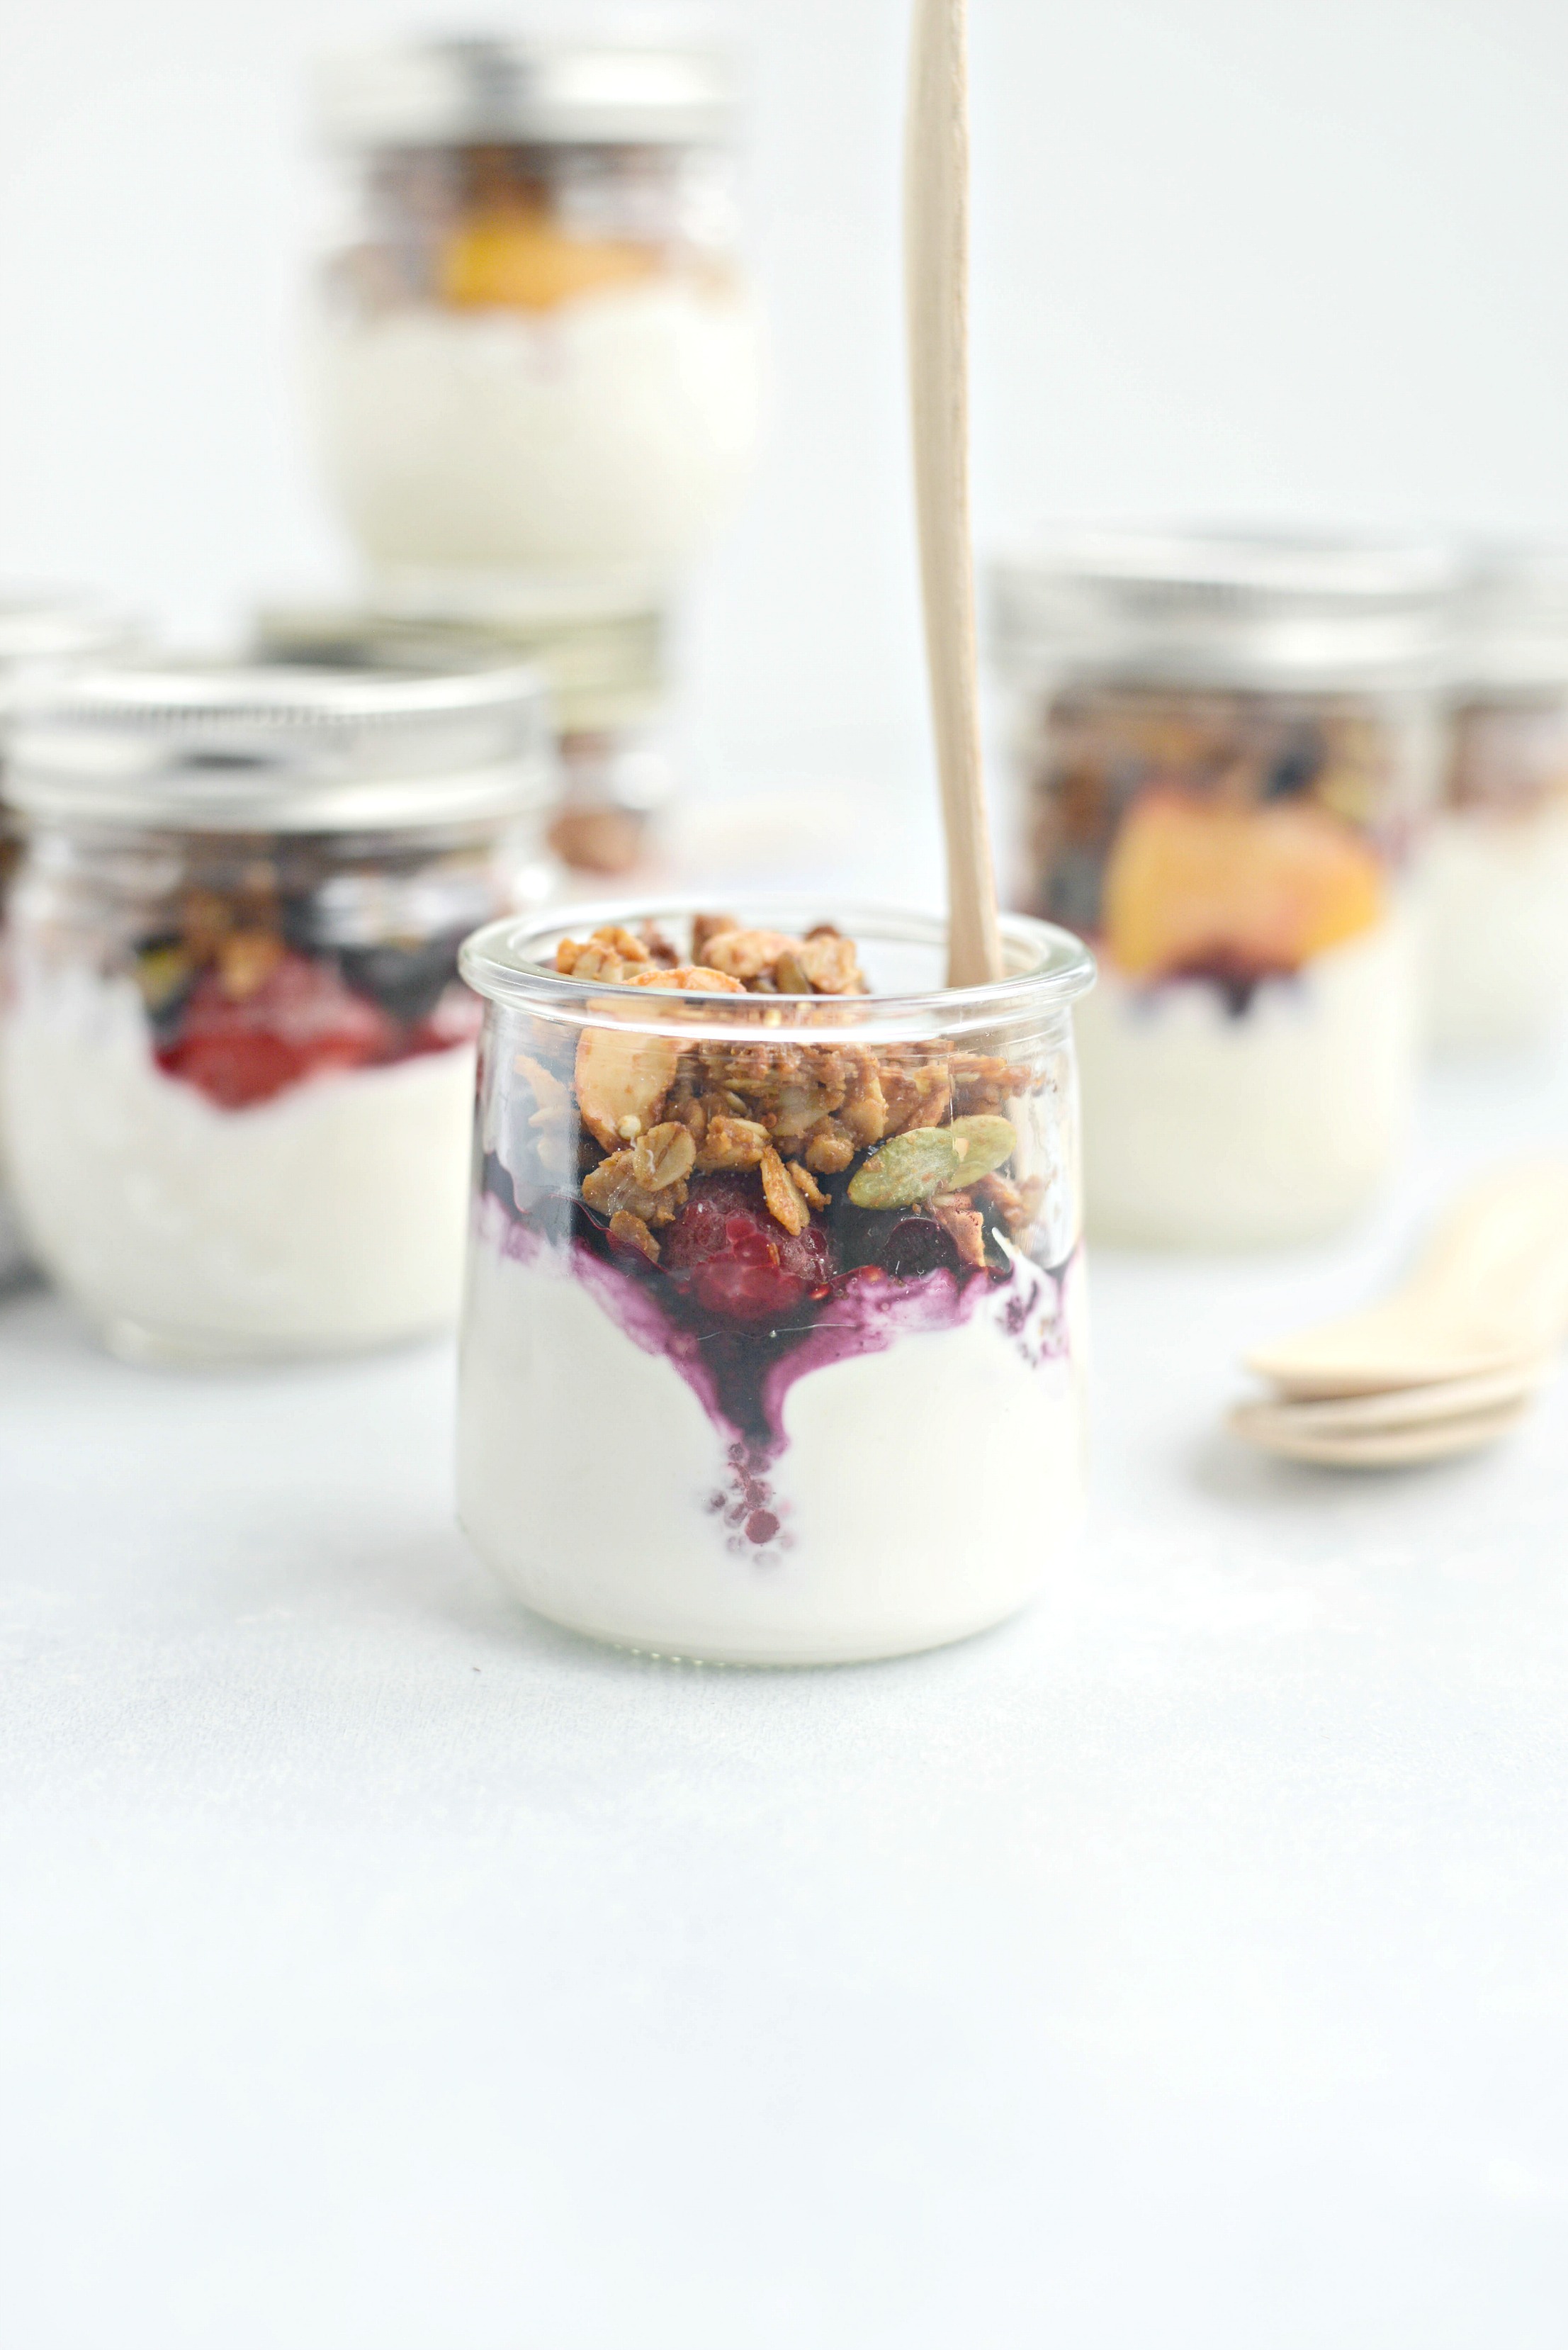 Fruit & Yogurt Parfait with Granola - Fit Foodie Finds